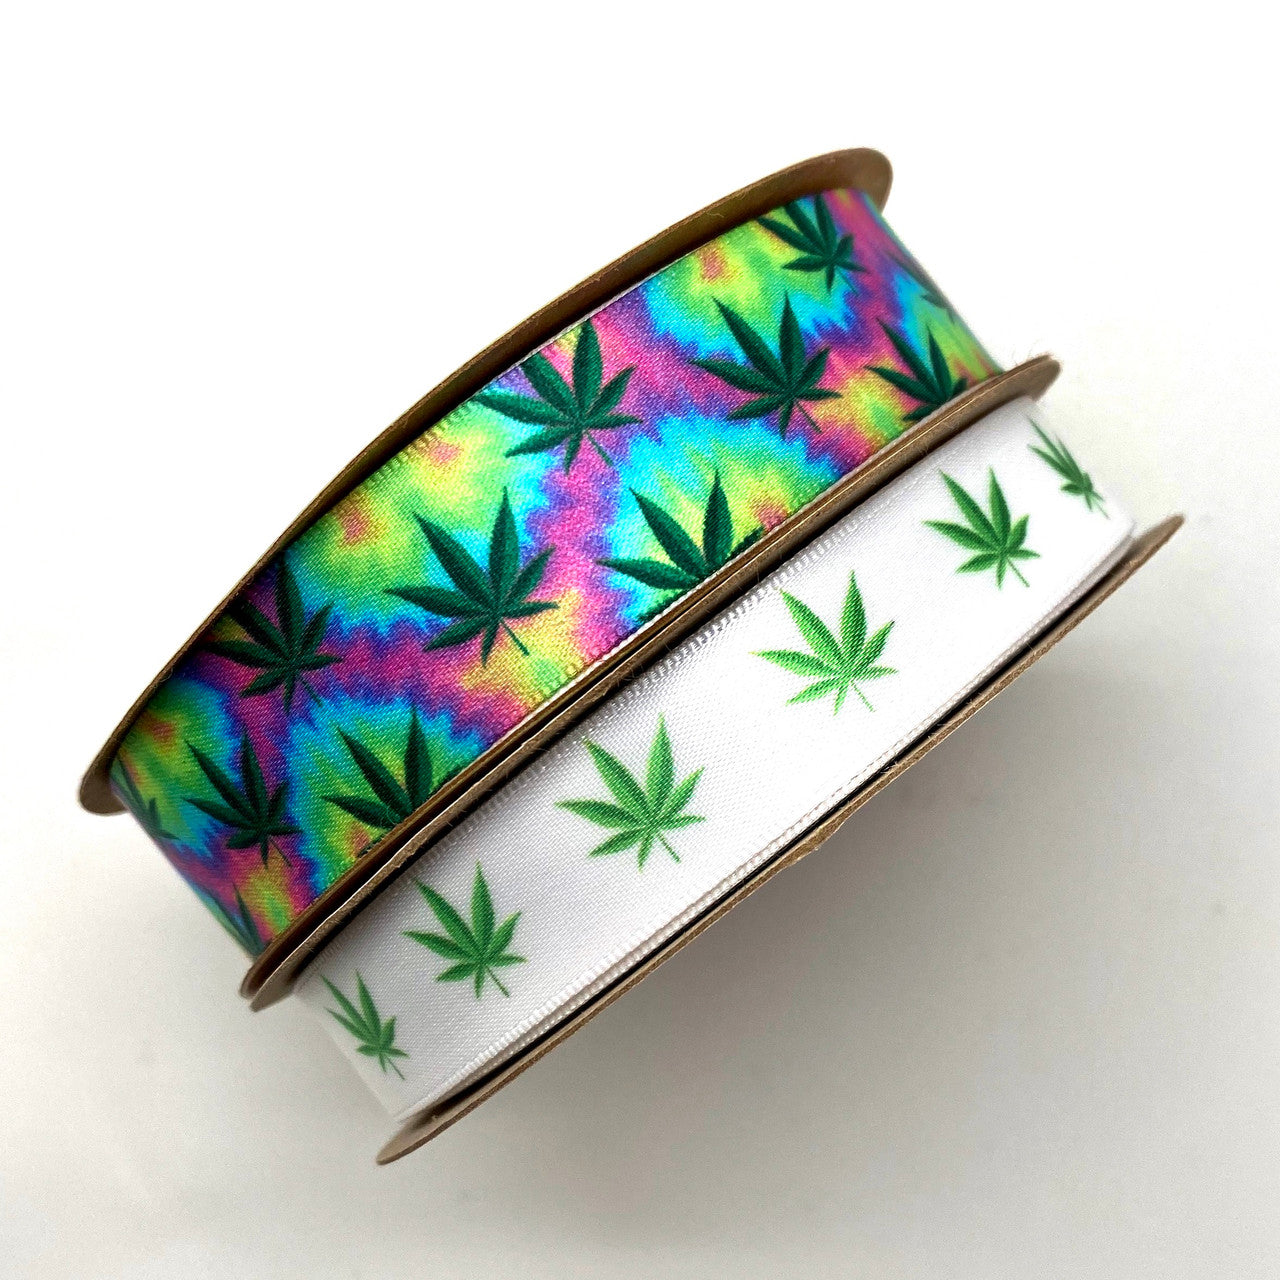 Marijuana leaves in shades of green printed on 5/8 white single